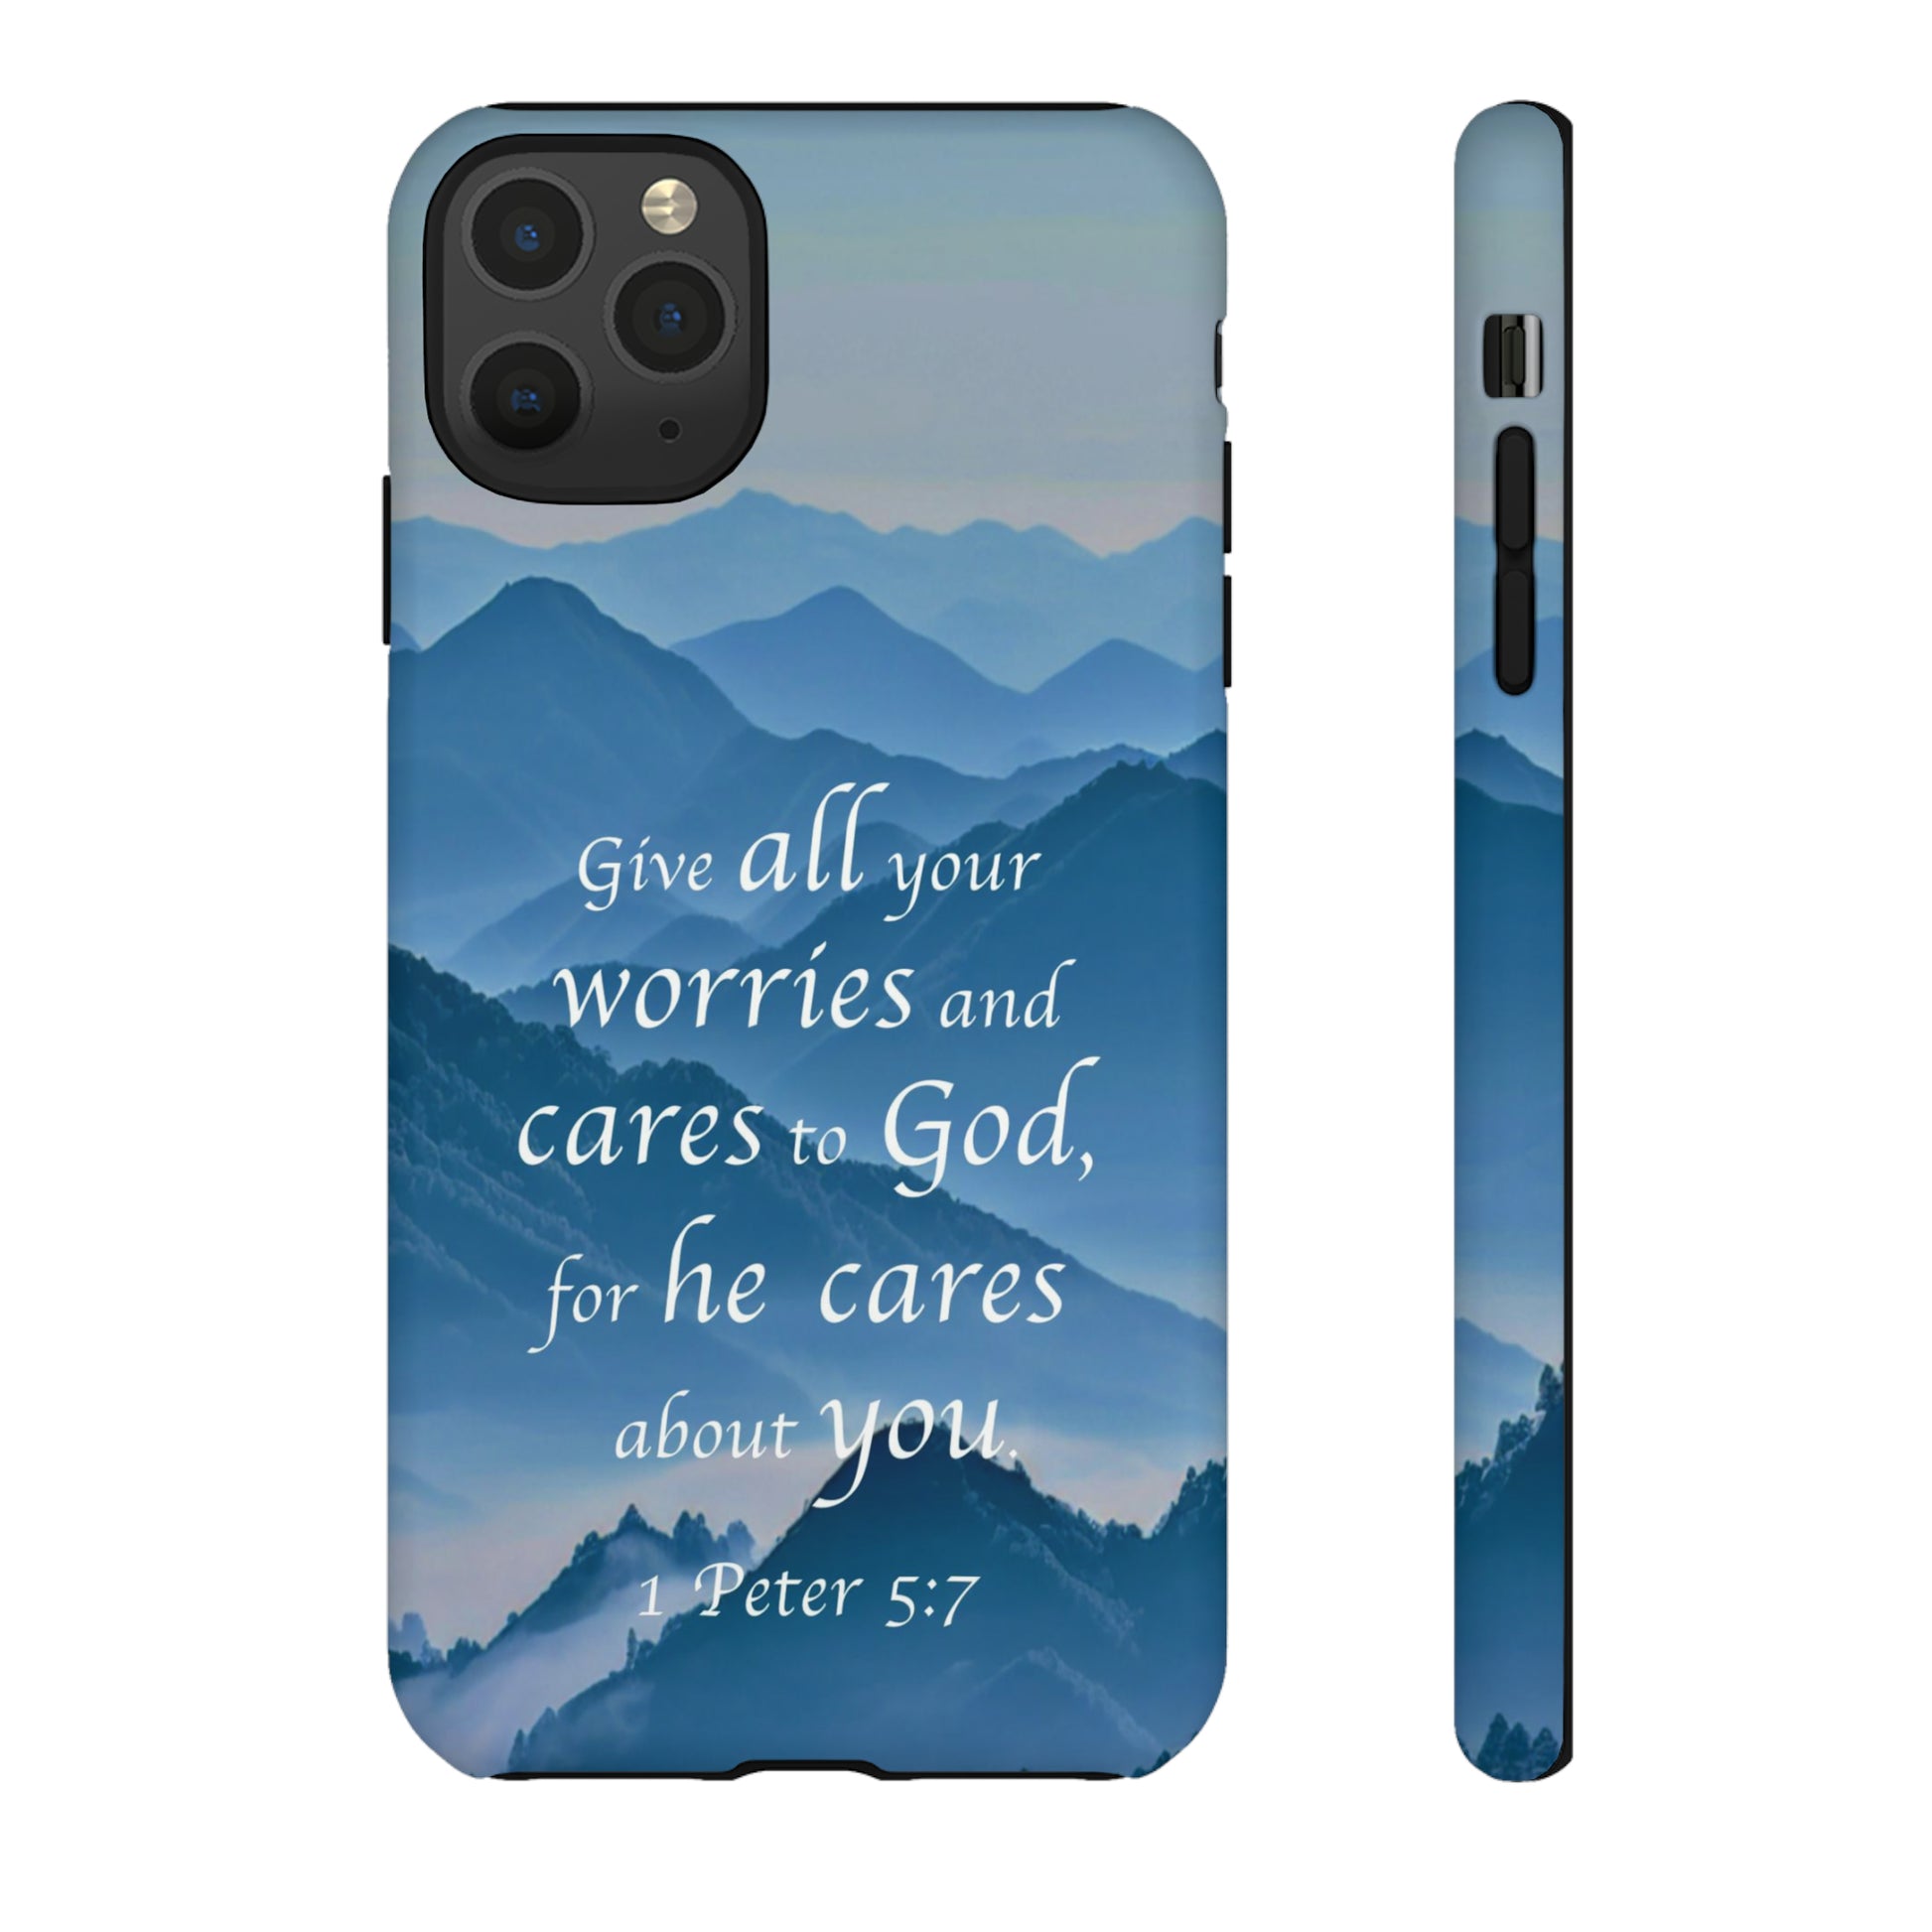 Christian phone case Samsung Galaxy S20 S20+ Ultra FE